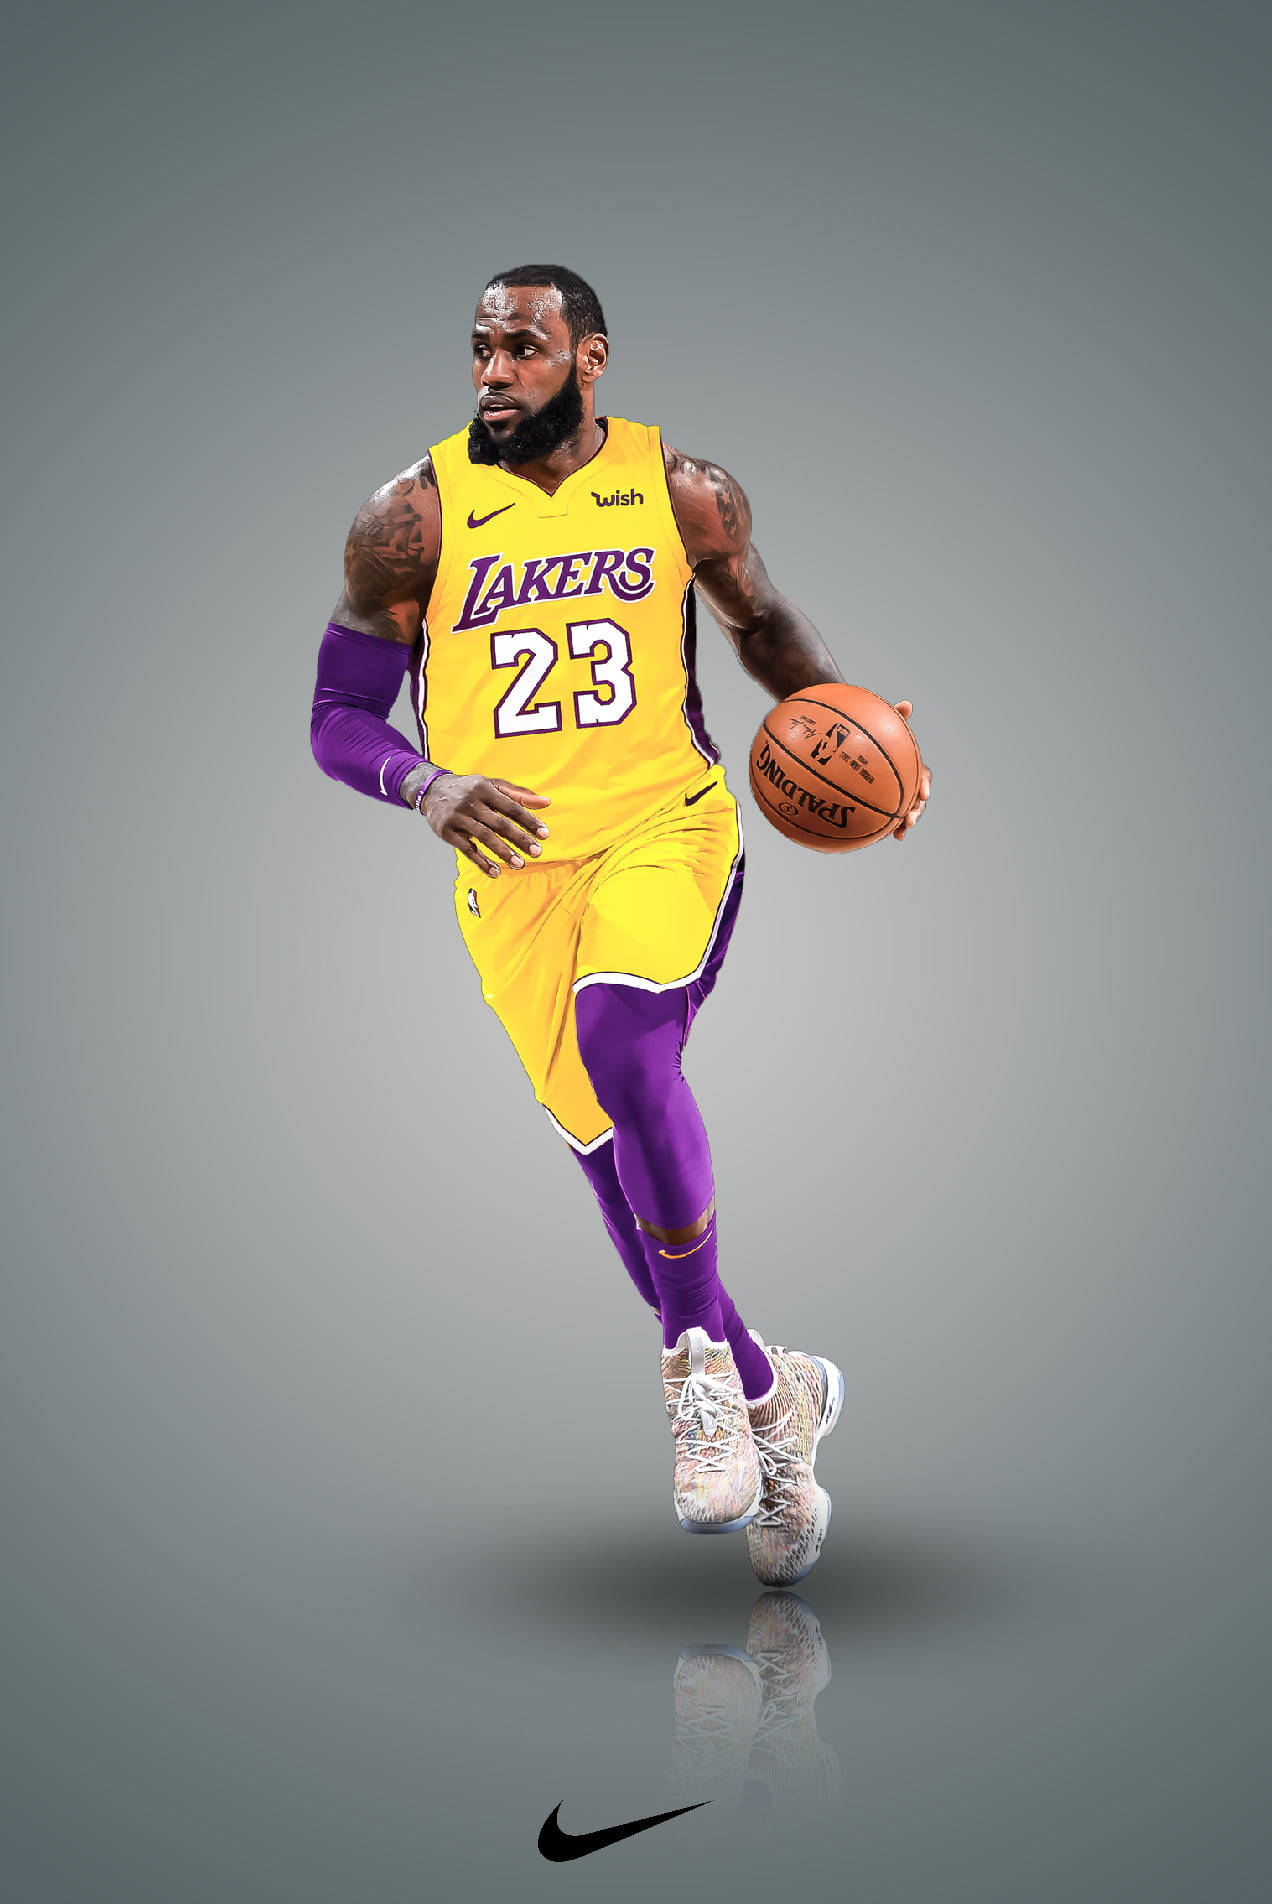 Lebron James Lakers 23 Background